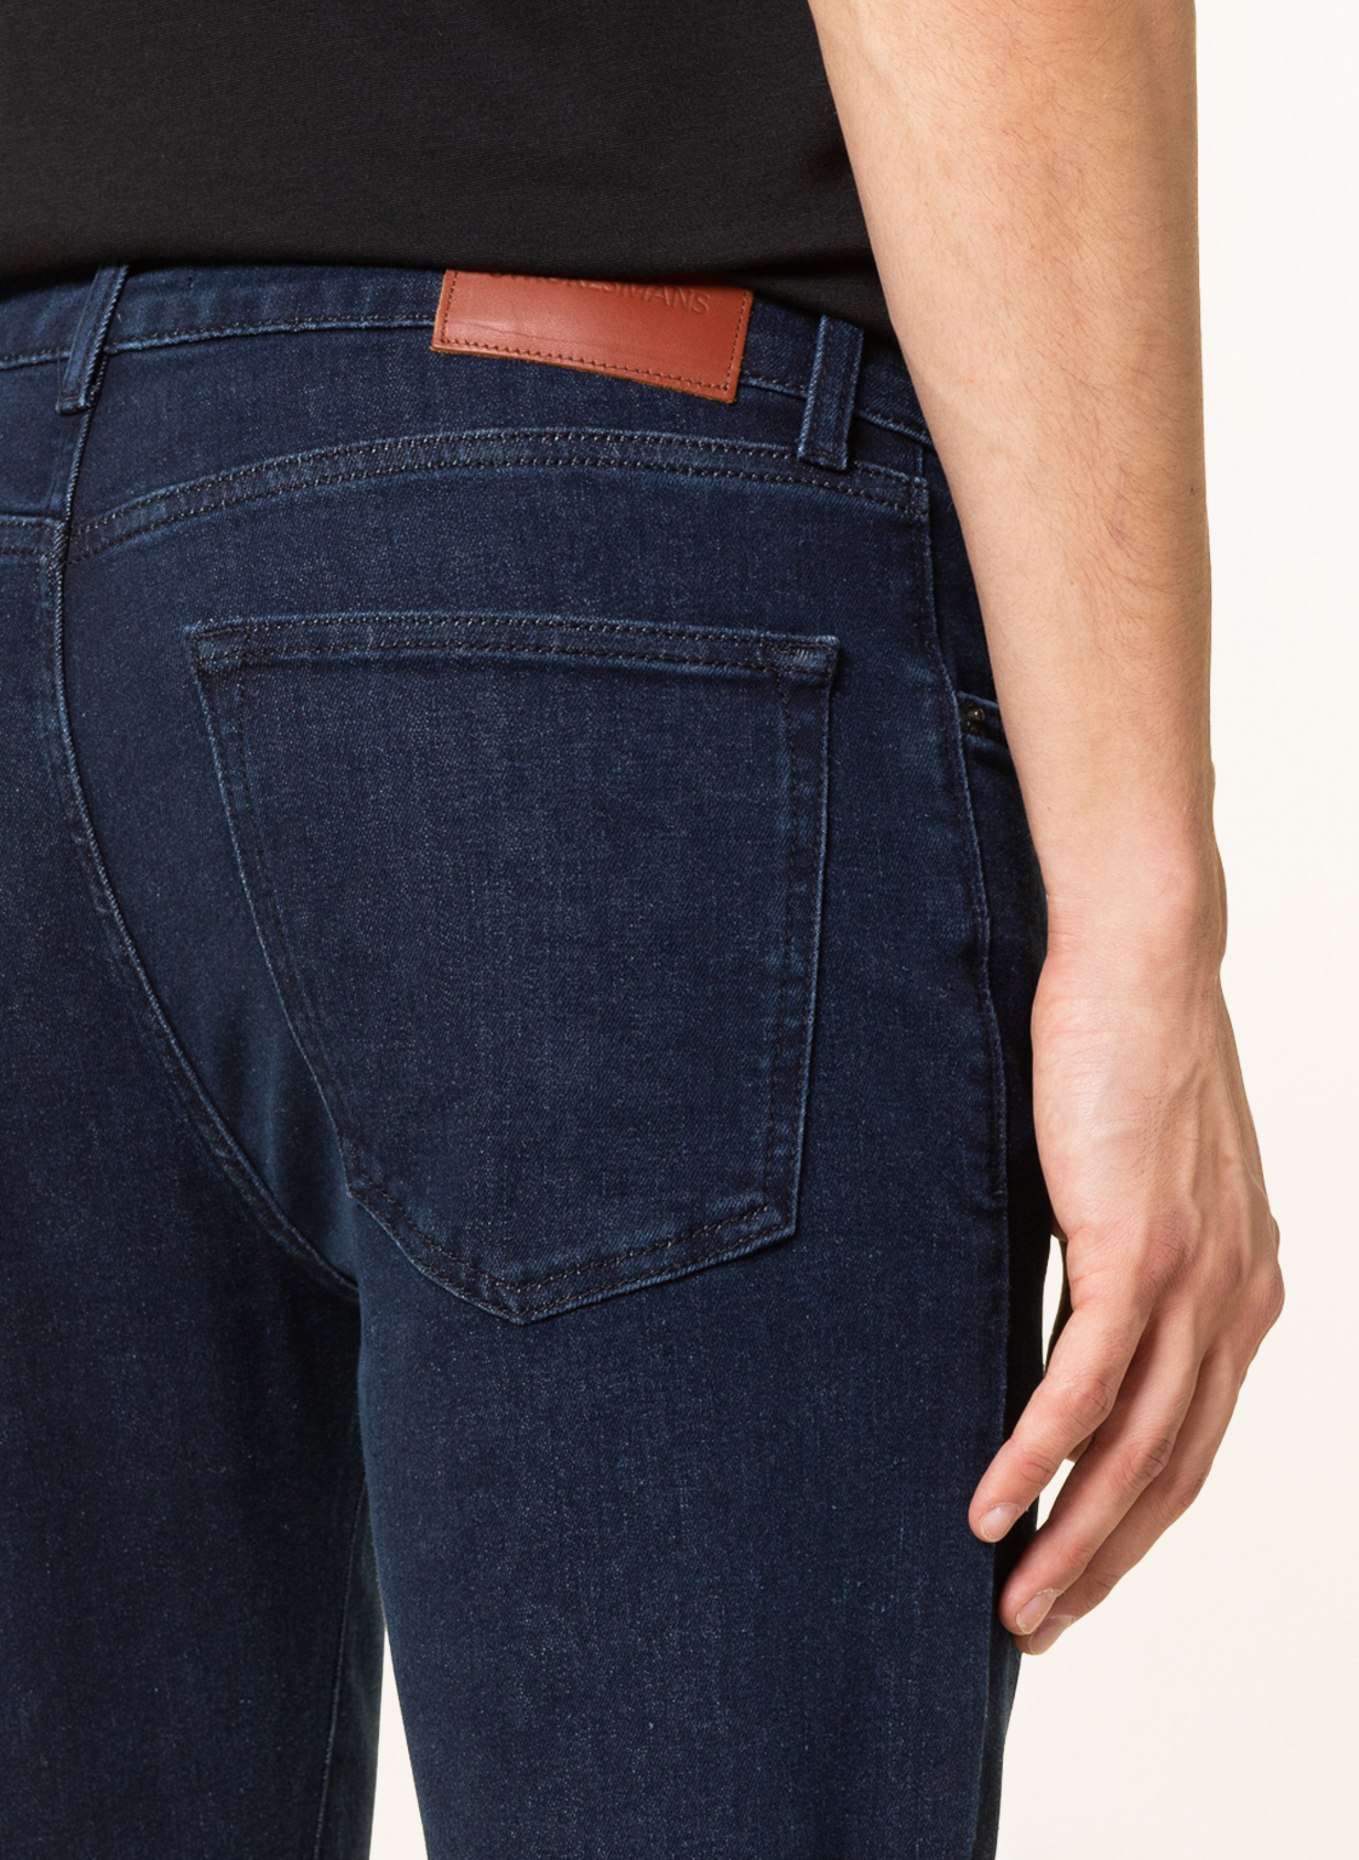 STROKESMAN'S Jeans Slim Fit, Farbe: 2 rinsed blue (Bild 5)